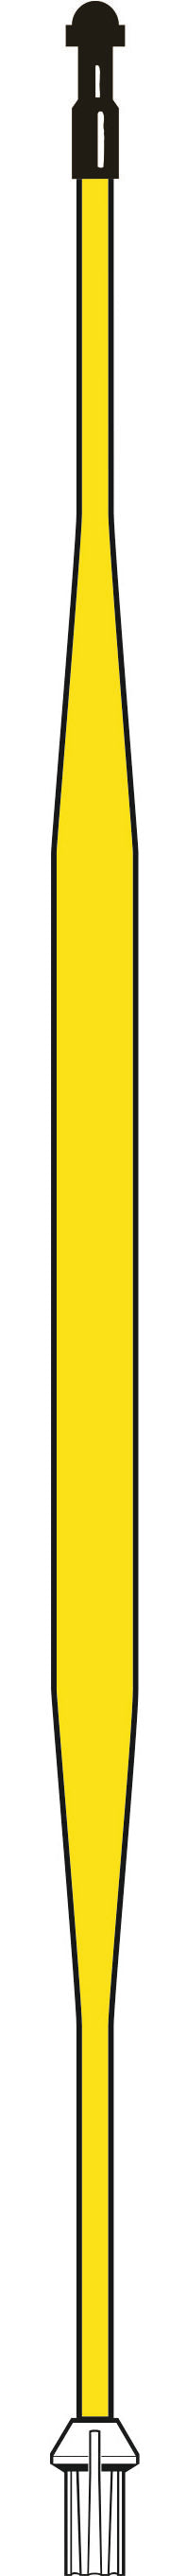 Tournament Flagstick 7.5' yellow